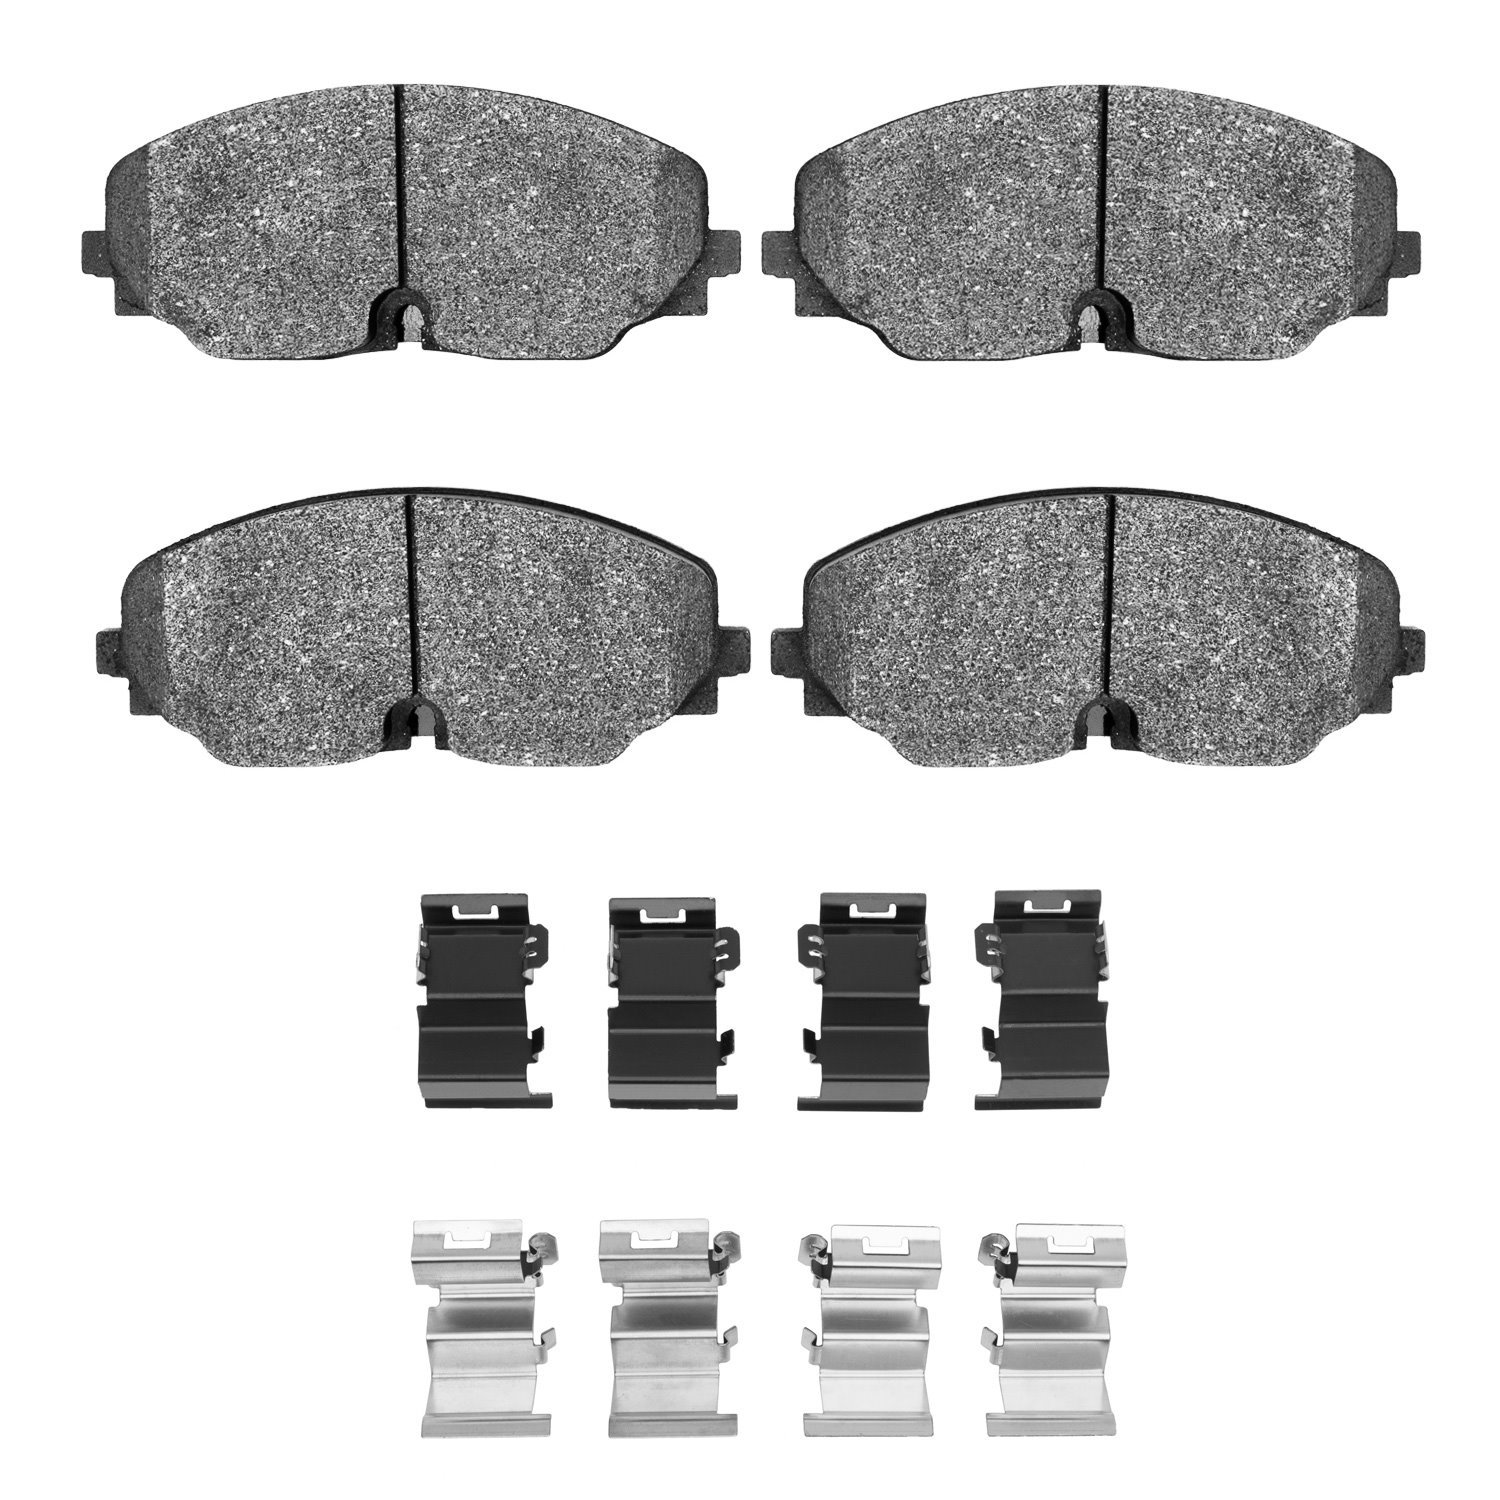 1310-2074-01 3000-Series Ceramic Brake Pads & Hardware Kit, Fits Select Audi/Volkswagen, Position: Front